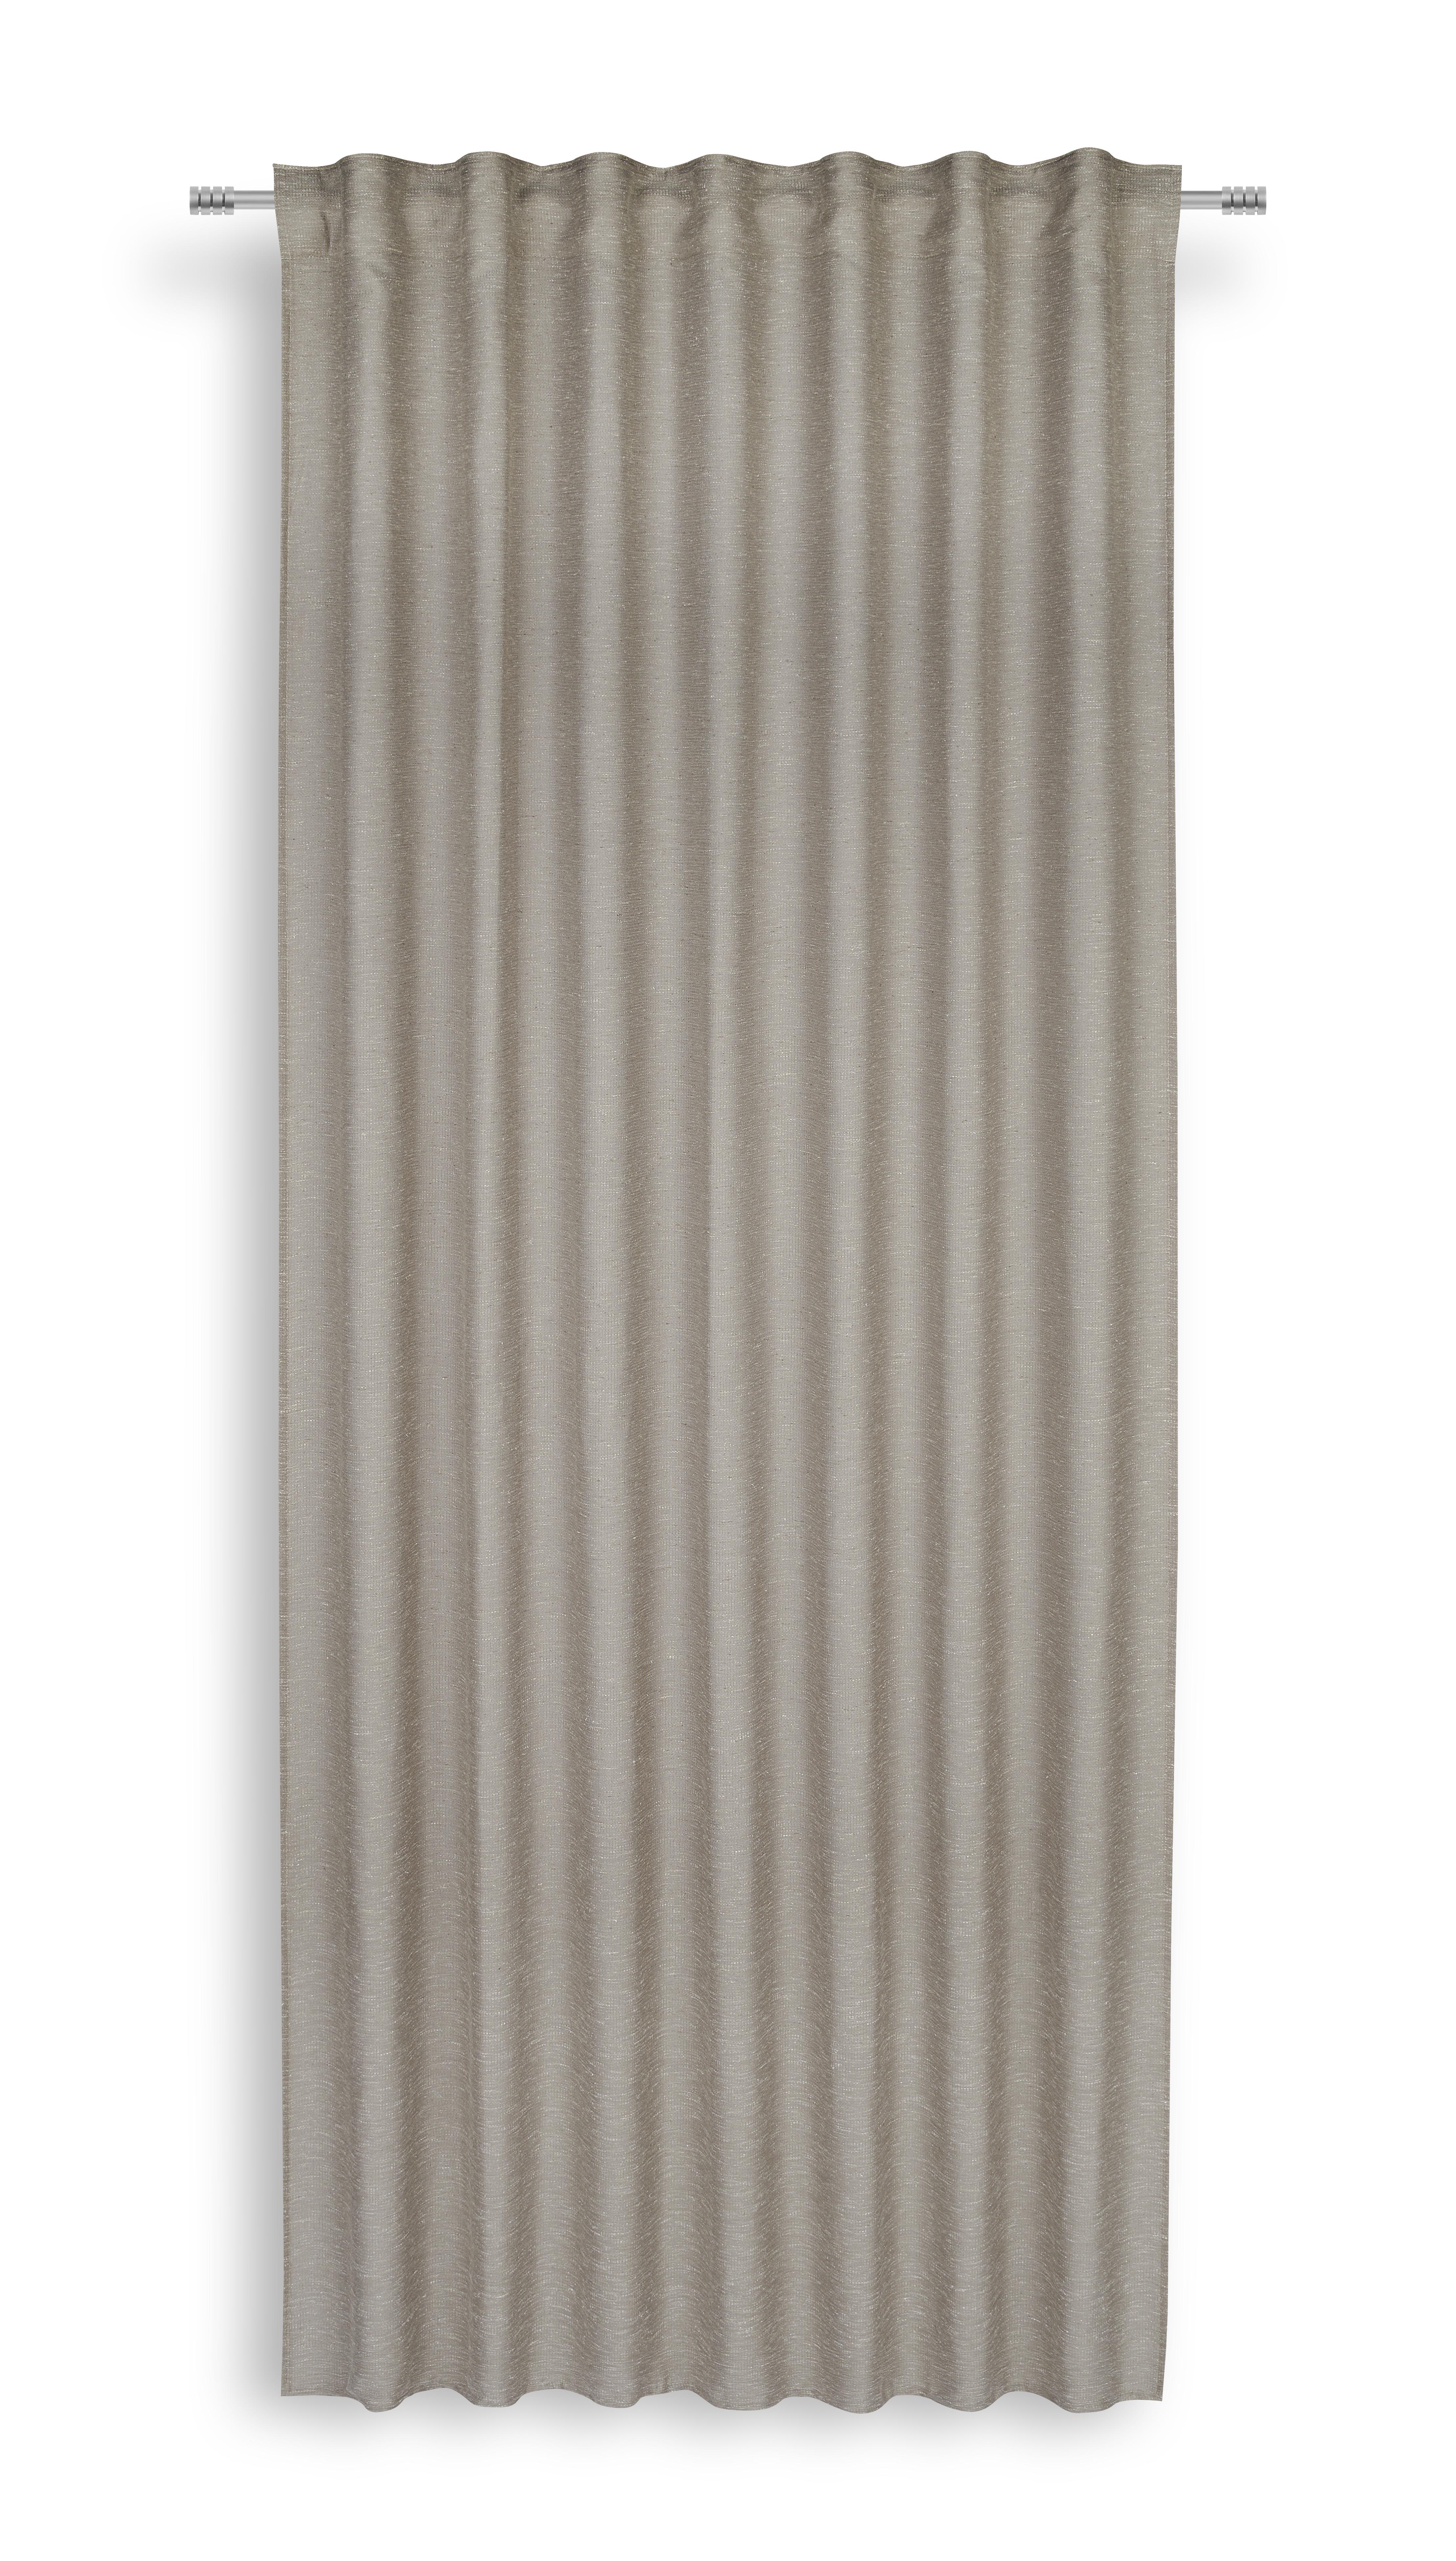 Készfüggöny Estelle - Taupe, modern, Textil (140/245cm) - Luca Bessoni